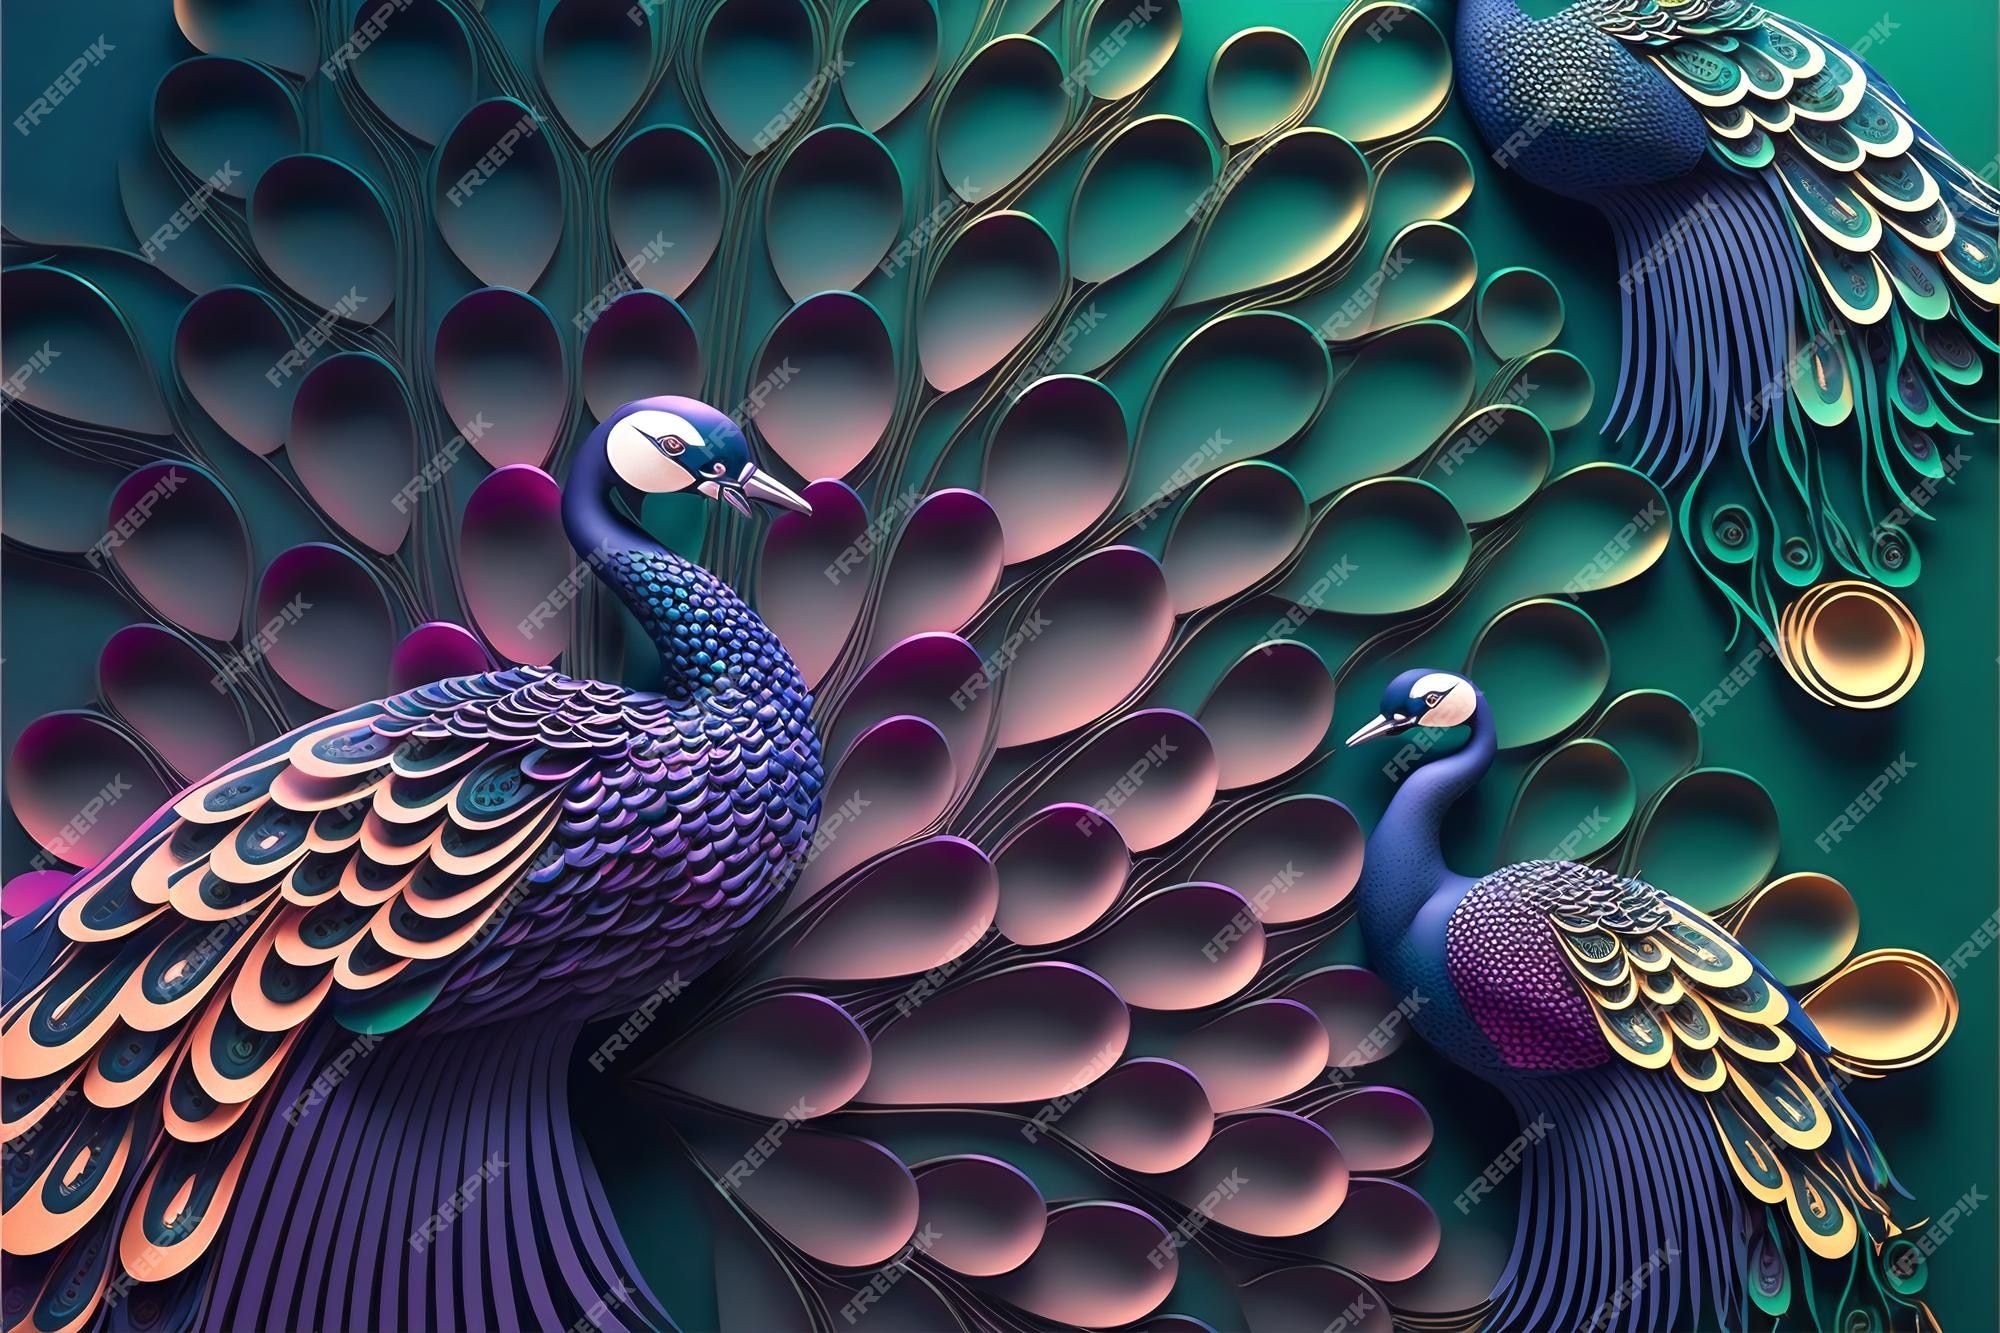 Colorful peacock wallpaper. colorful